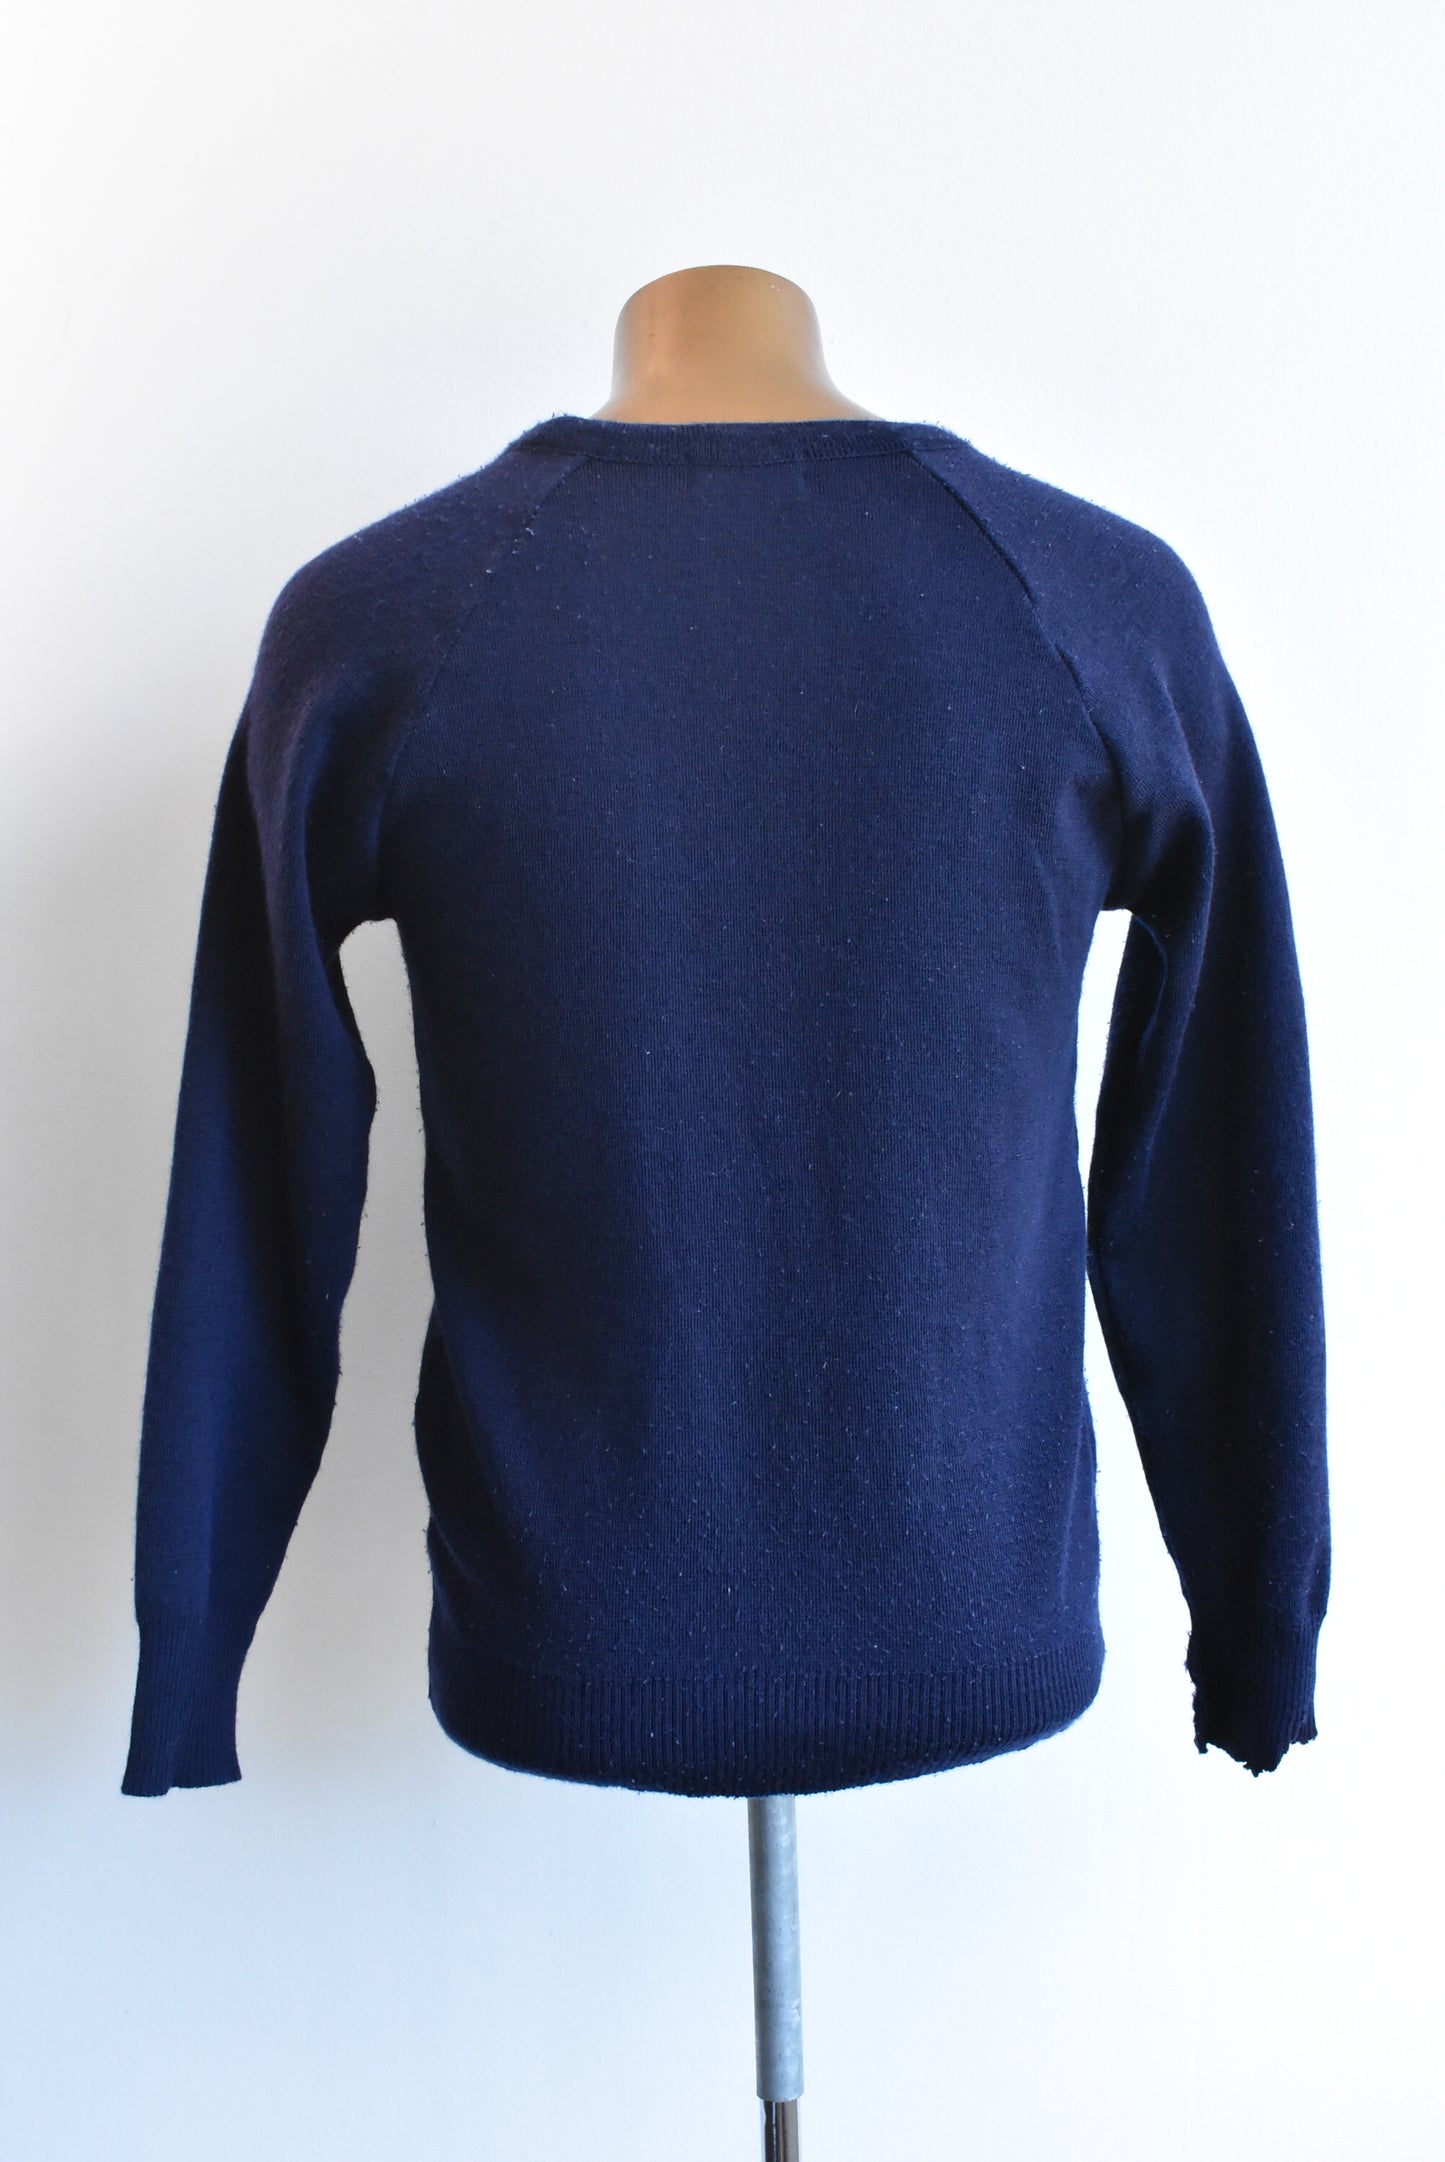 John McGlashan College Classwear navy wool school jersey, 92cm